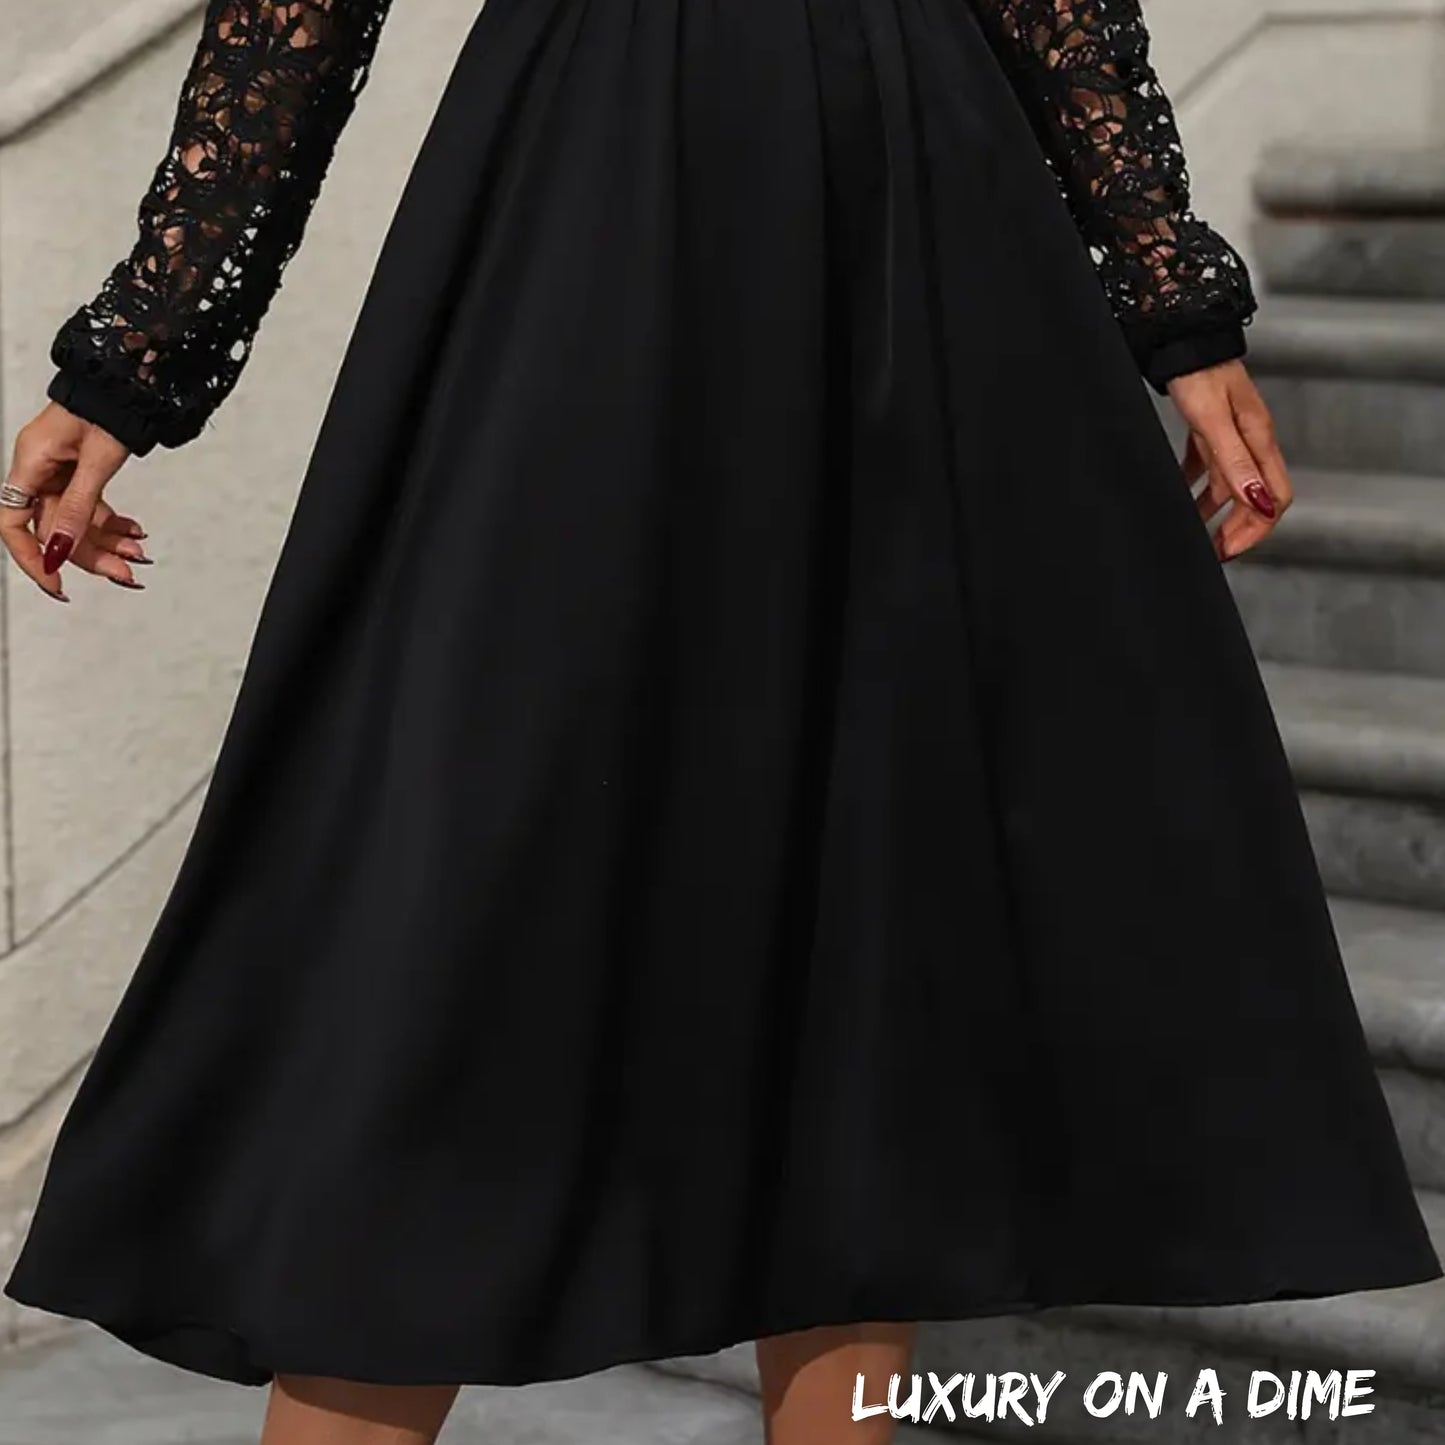 Elegant Crochet Lace Long Sleeve Classy Surplice V-Neck Midi Dress